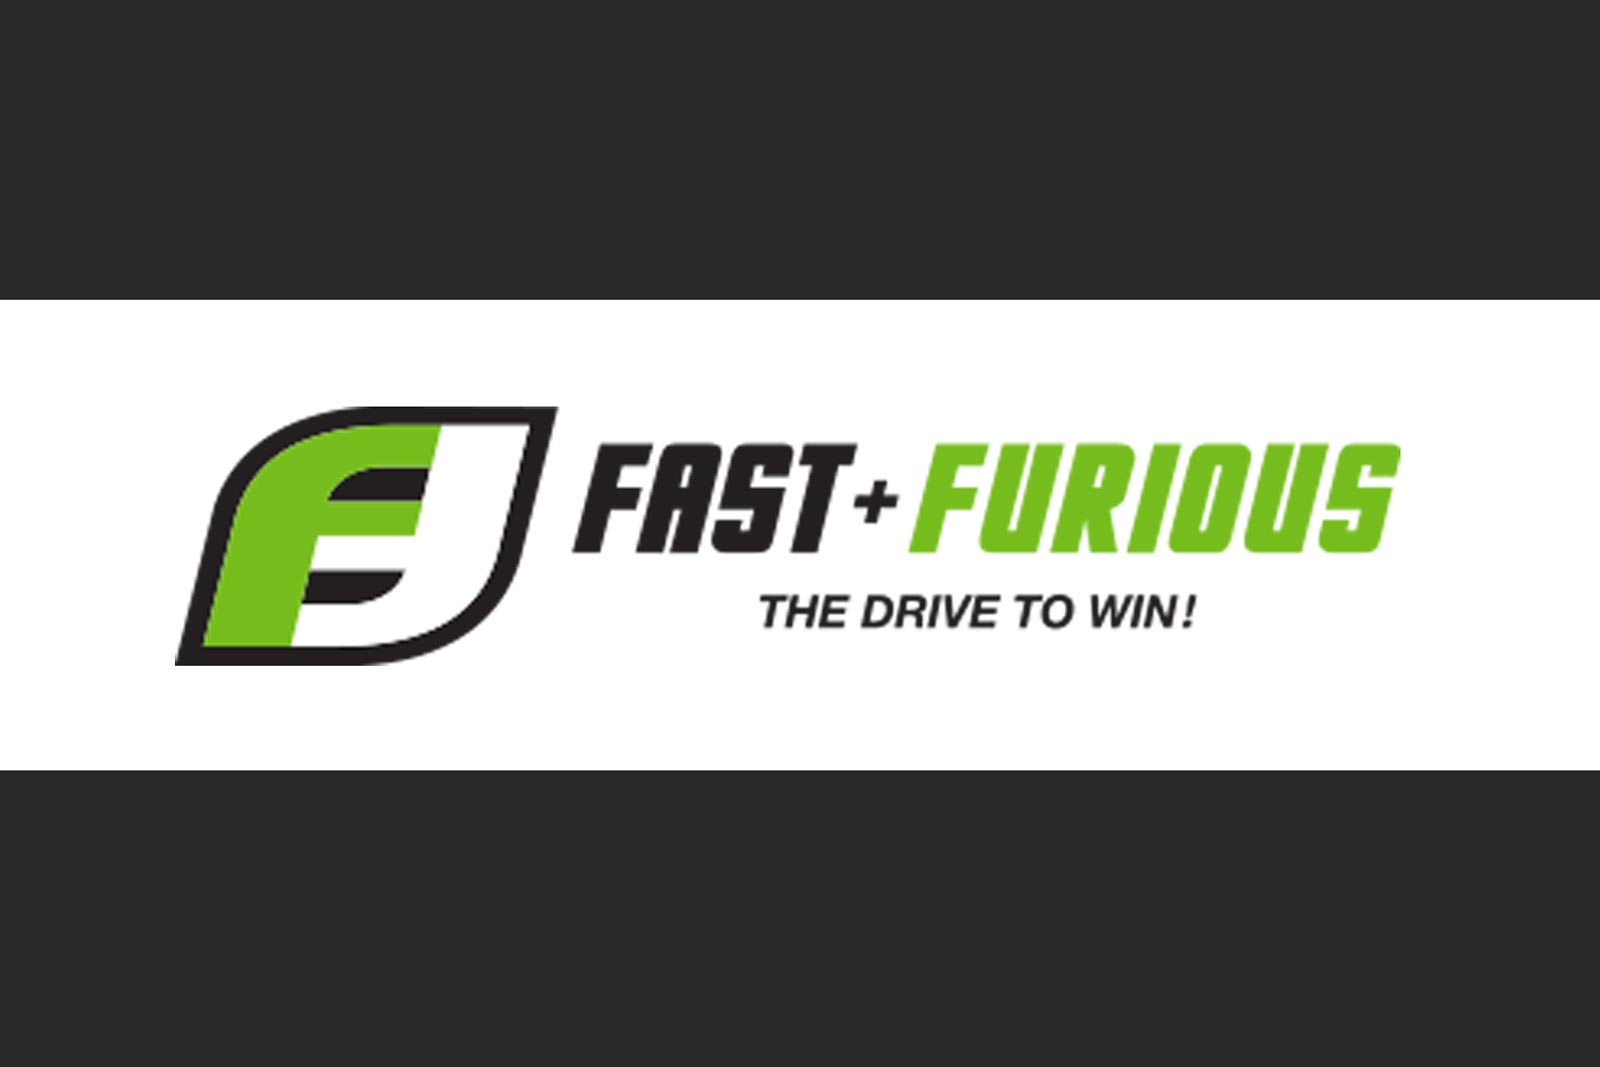 Fast & Furious, Mount Edgecombe, Durban